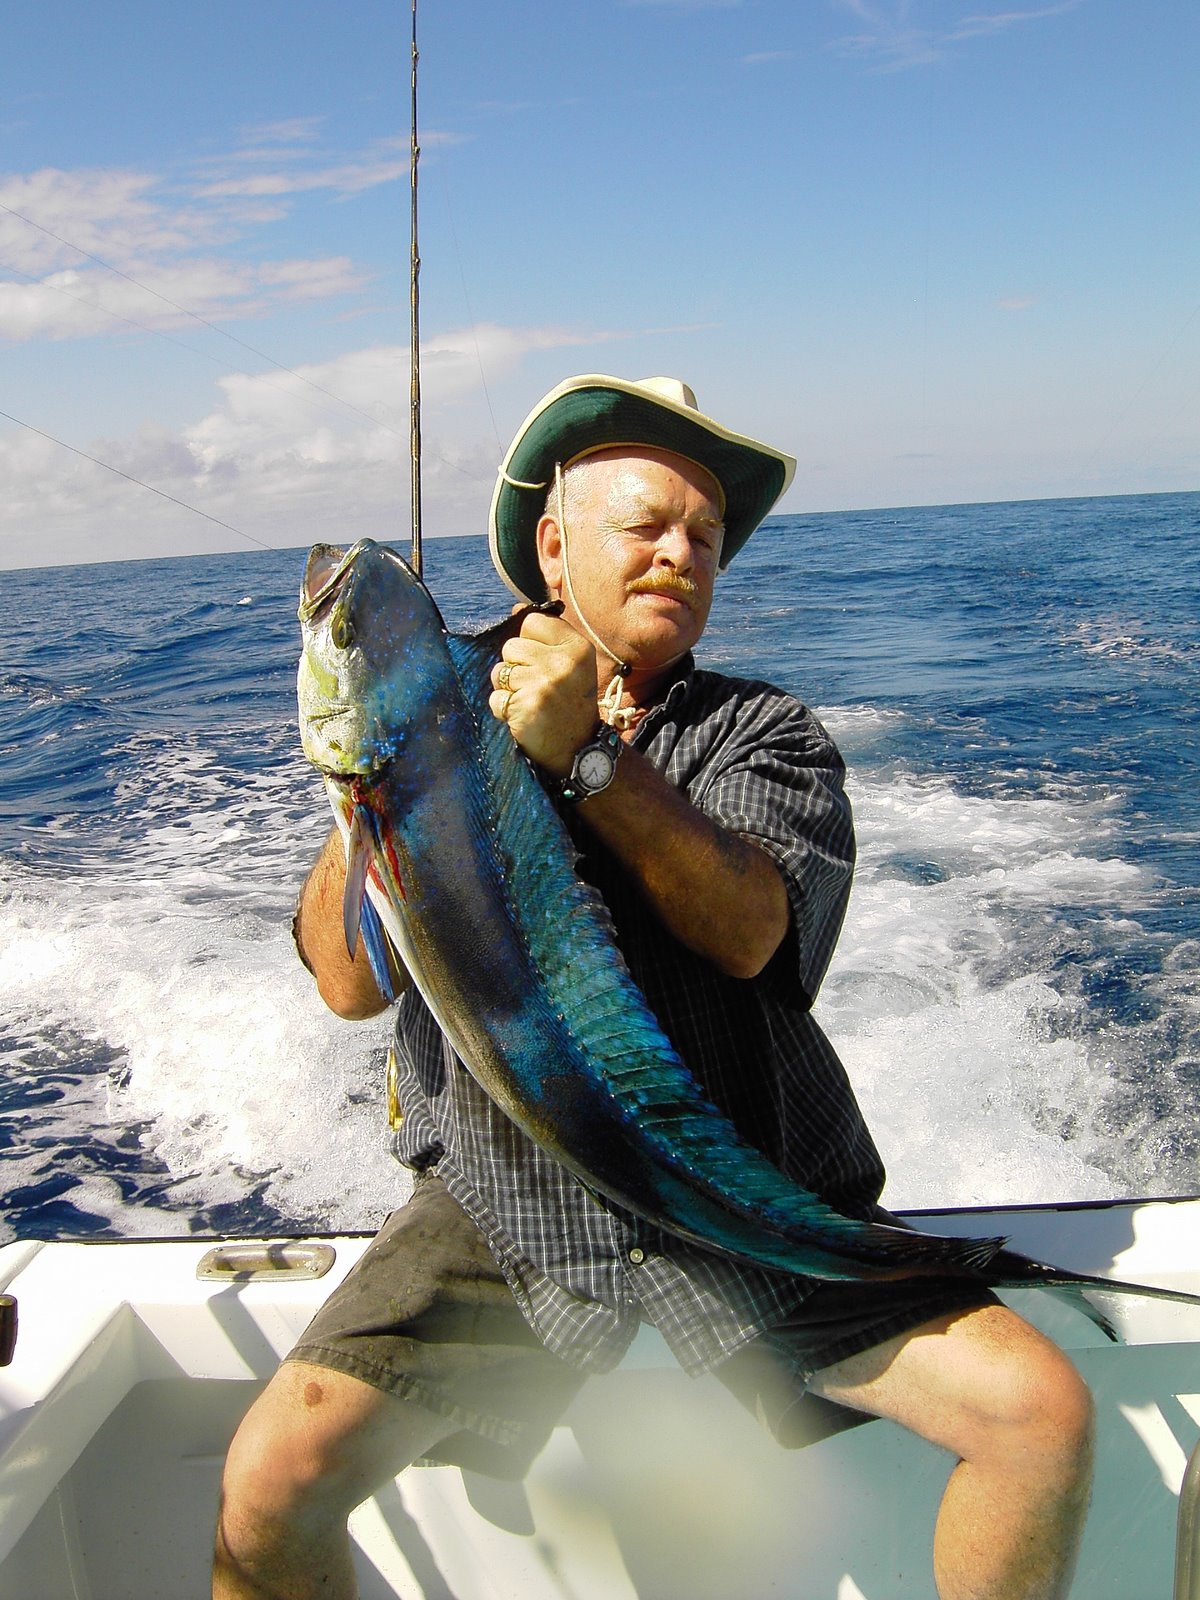 jimfrogs: Still fishing in Costa Rica